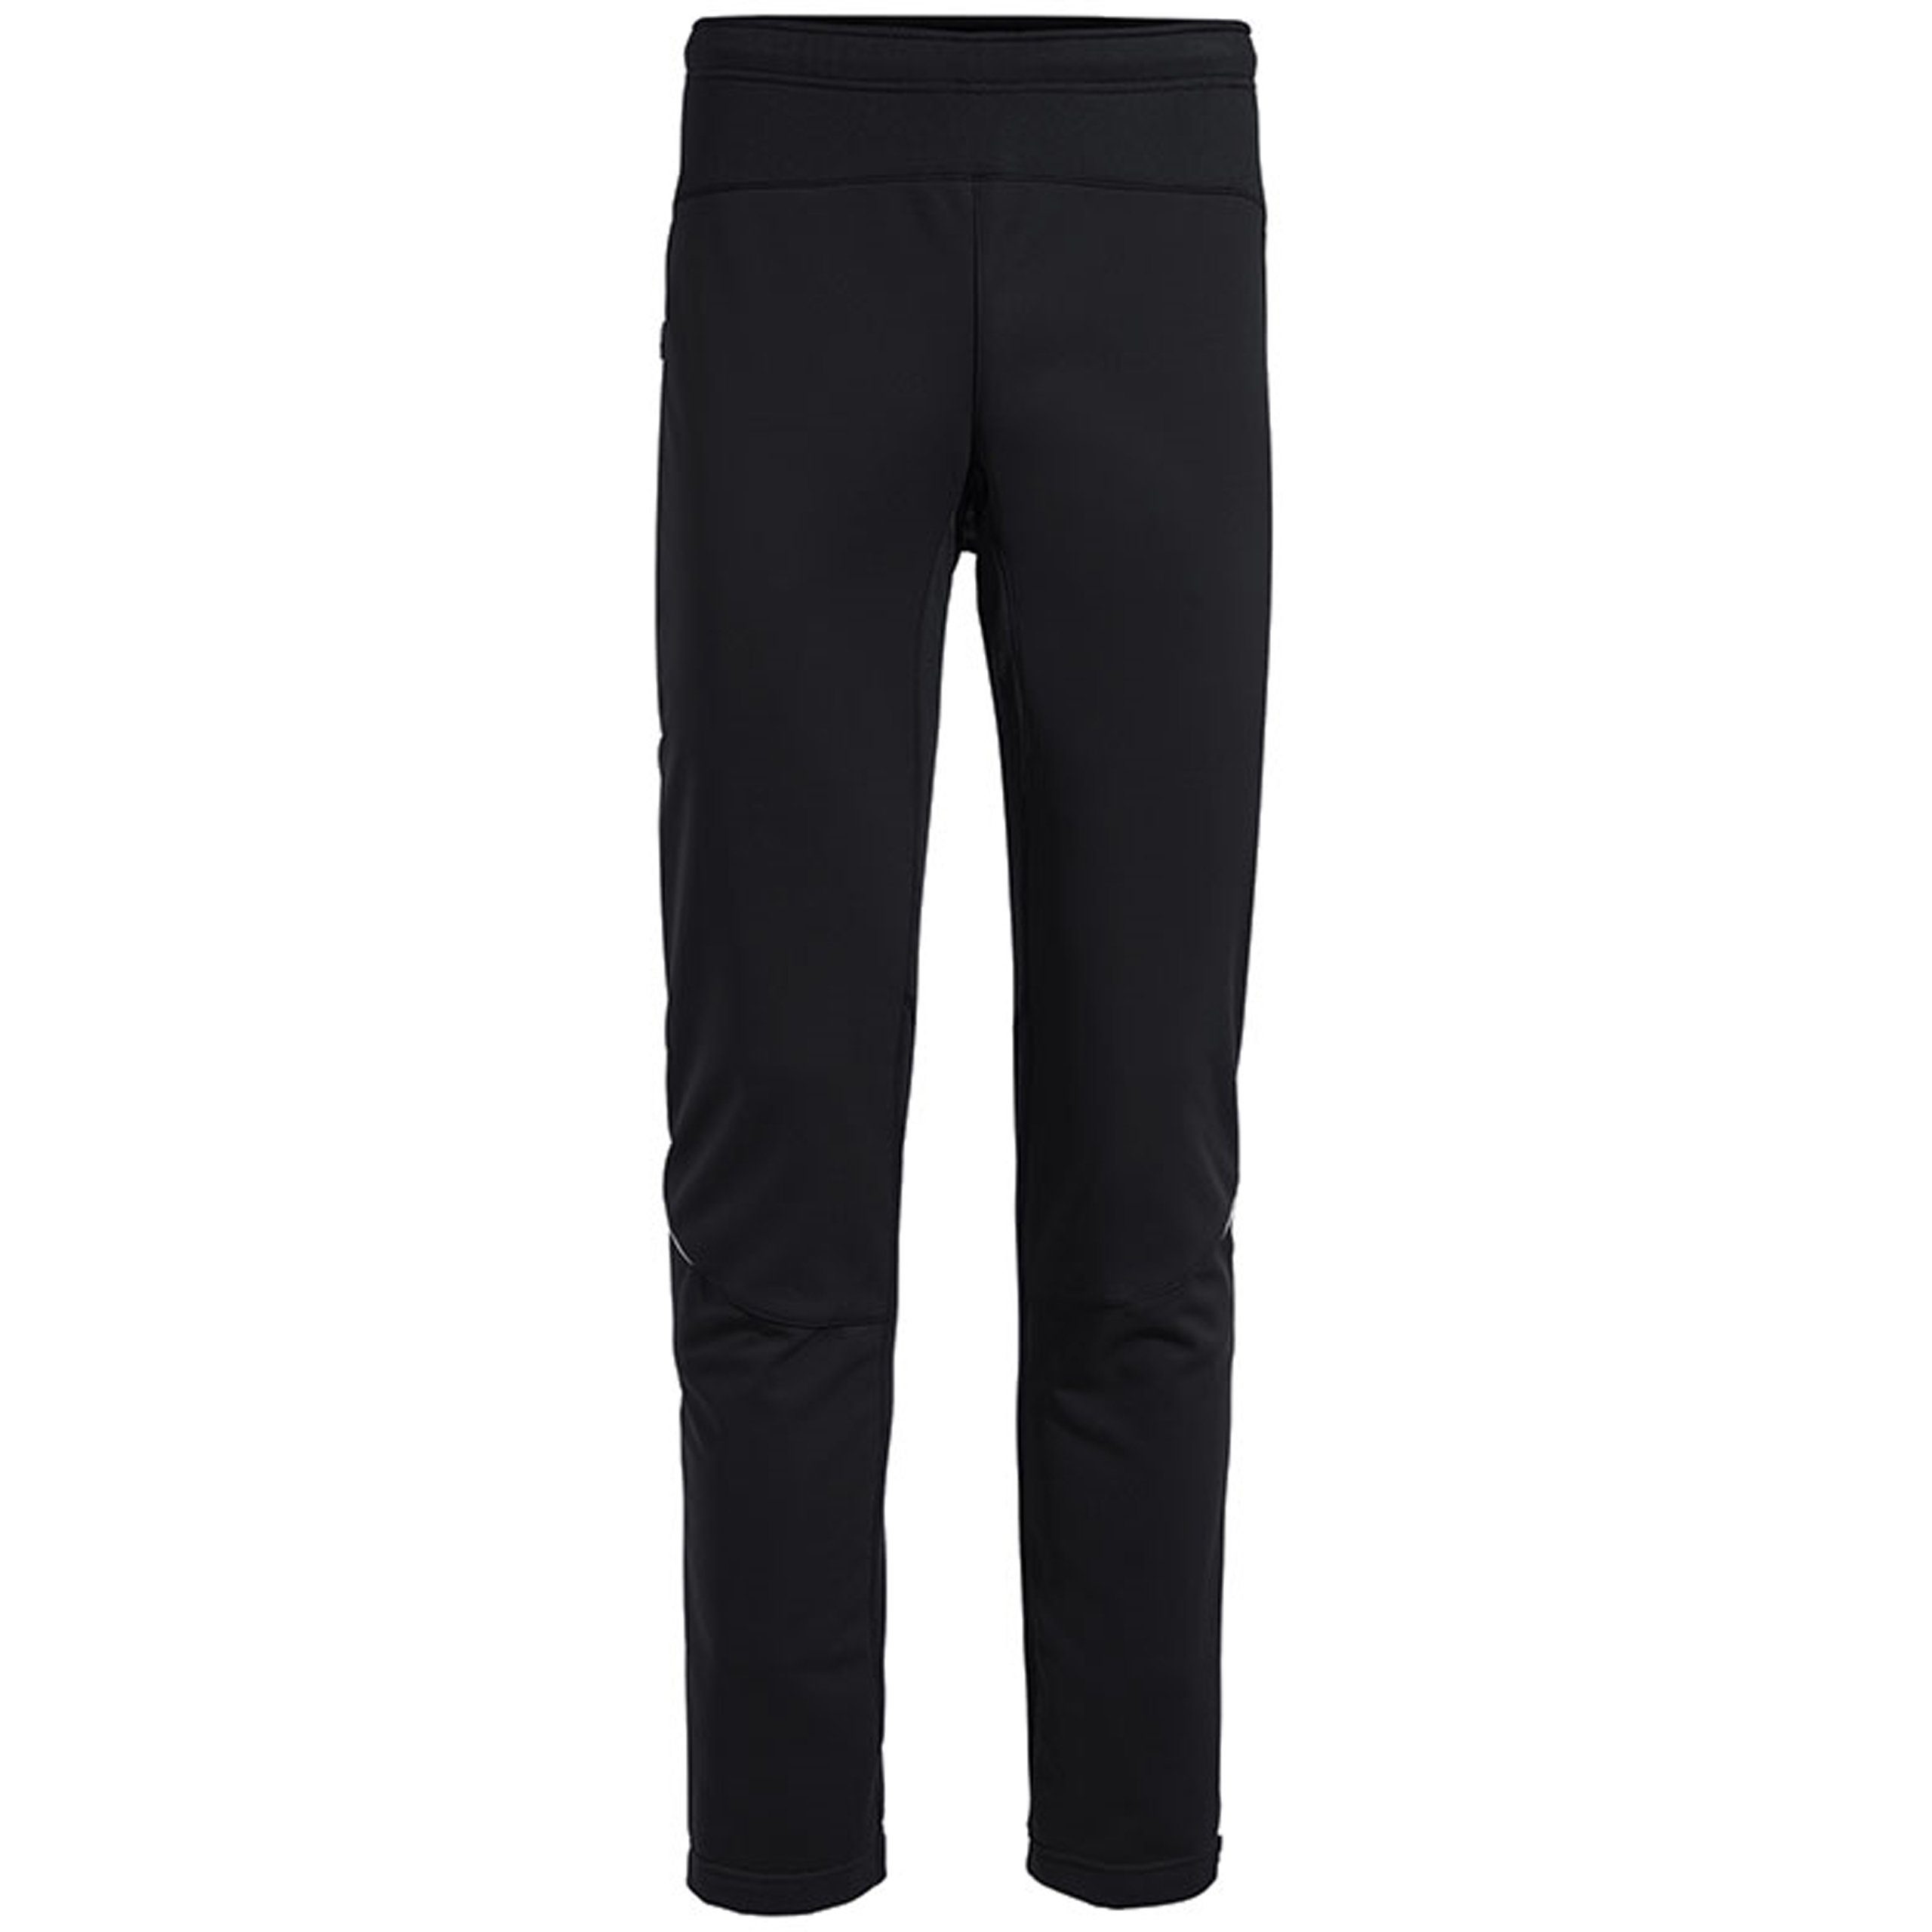 VAUDE Funktionshose VAUDE Men's Wintry Pants IV - elastische Winter Softshellhose/Radhose black